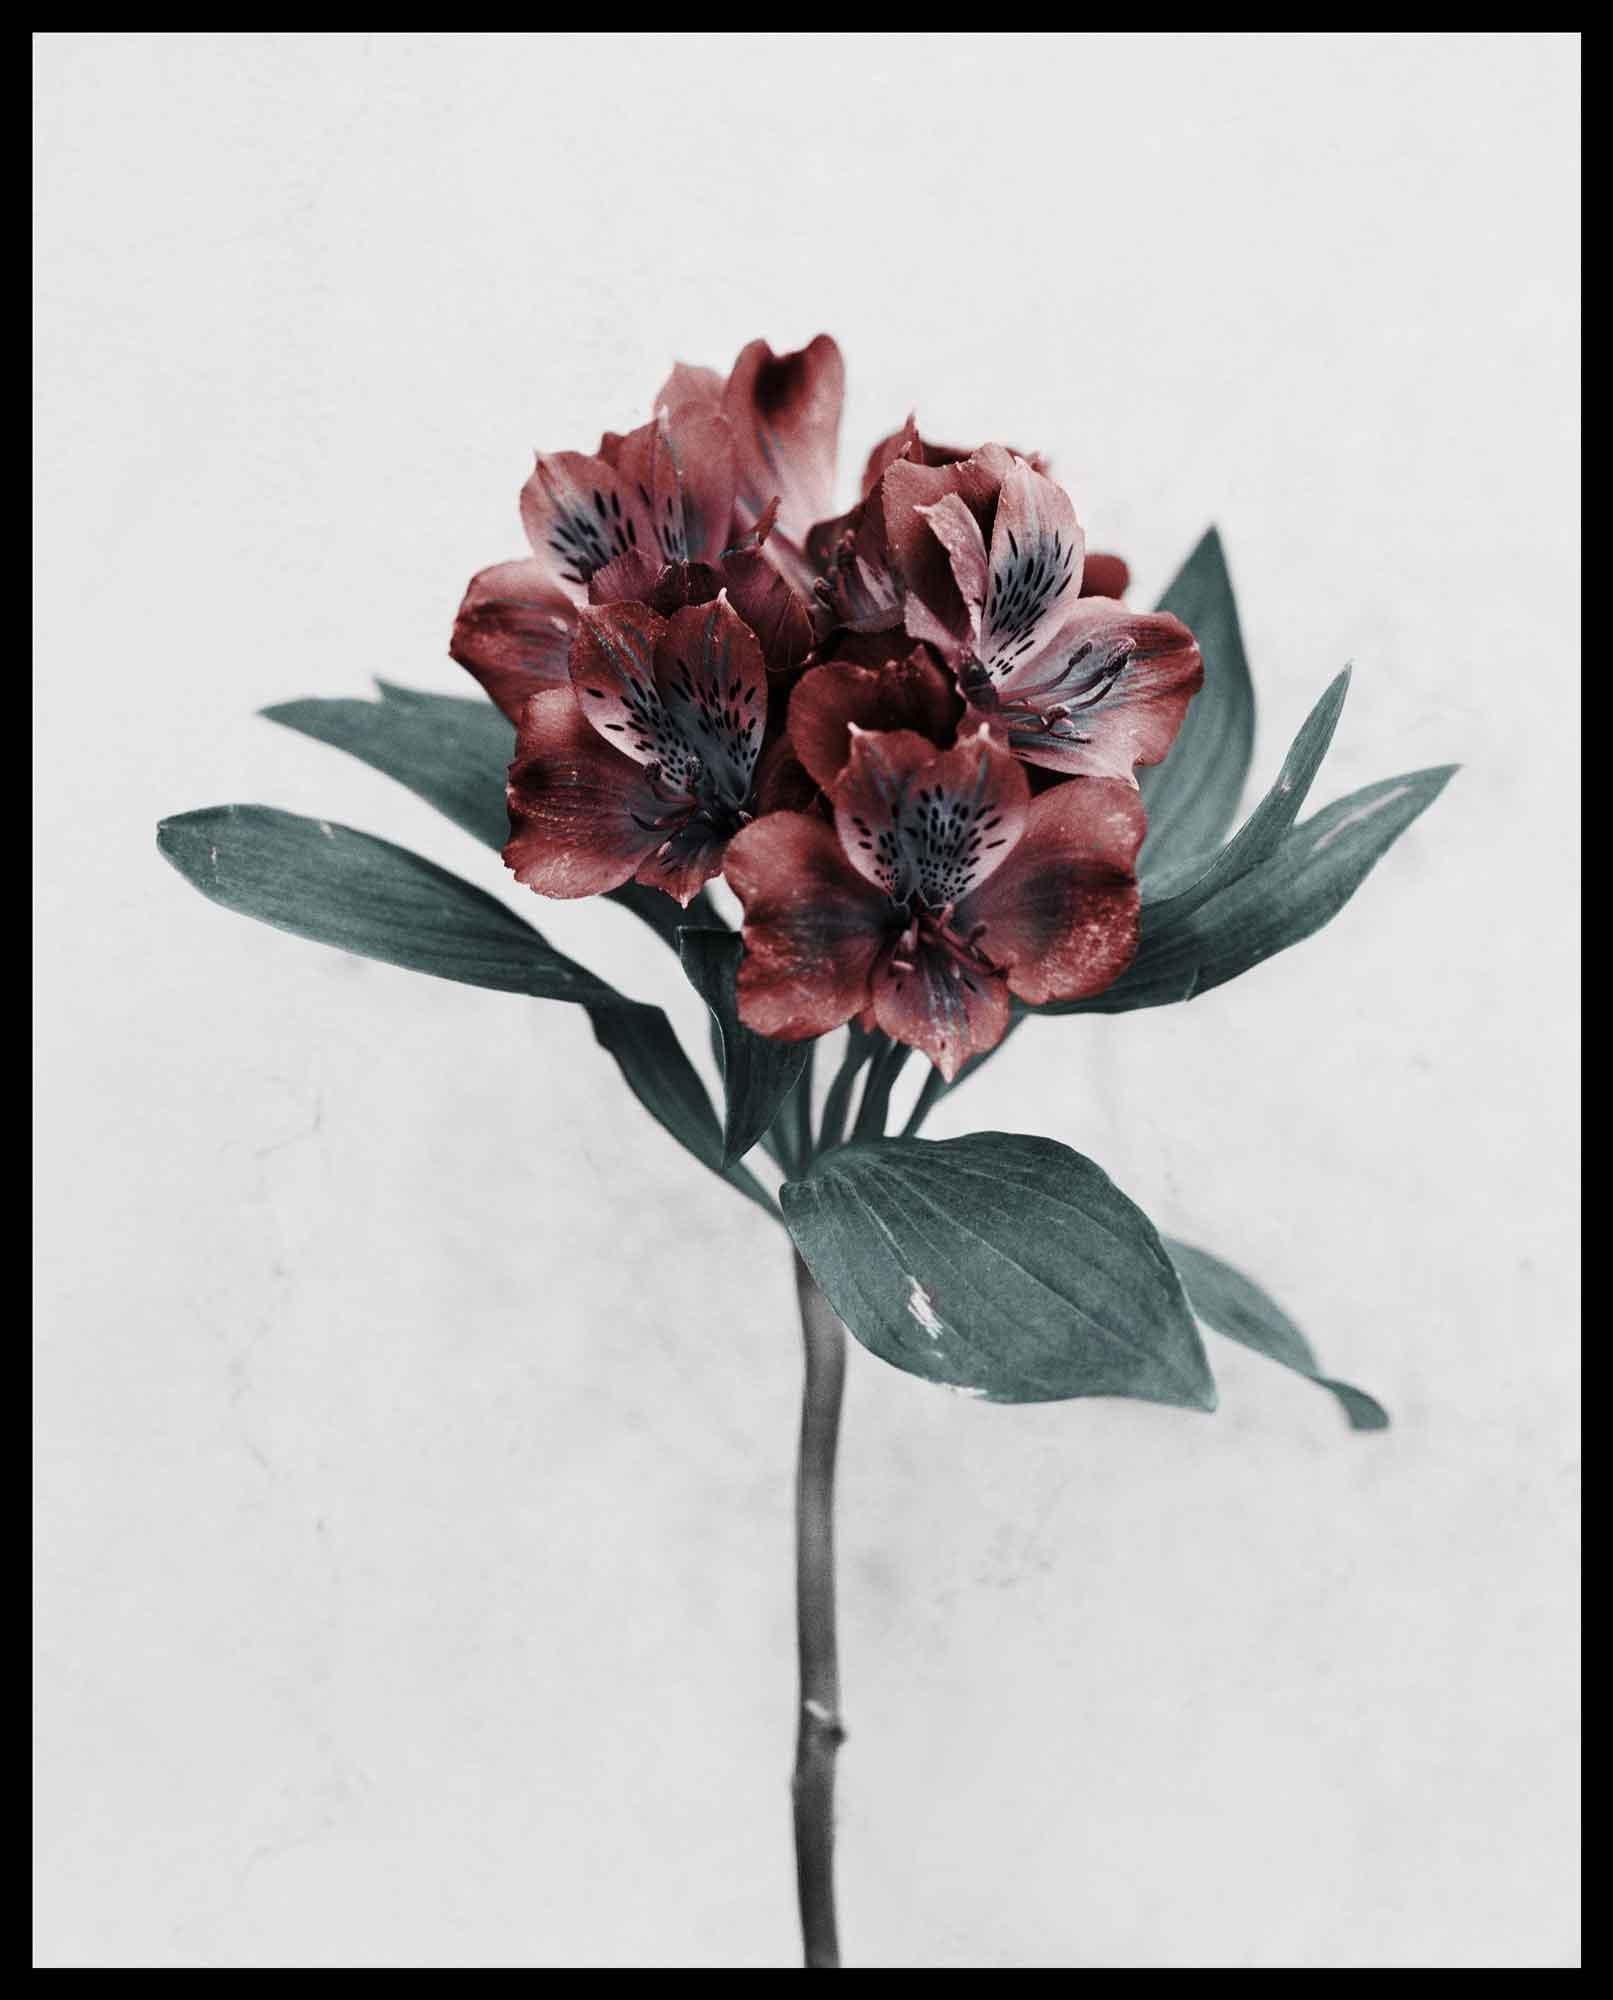 Botanica #8 (Alstroemeria) - Gray Still-Life Photograph by Vee Speers